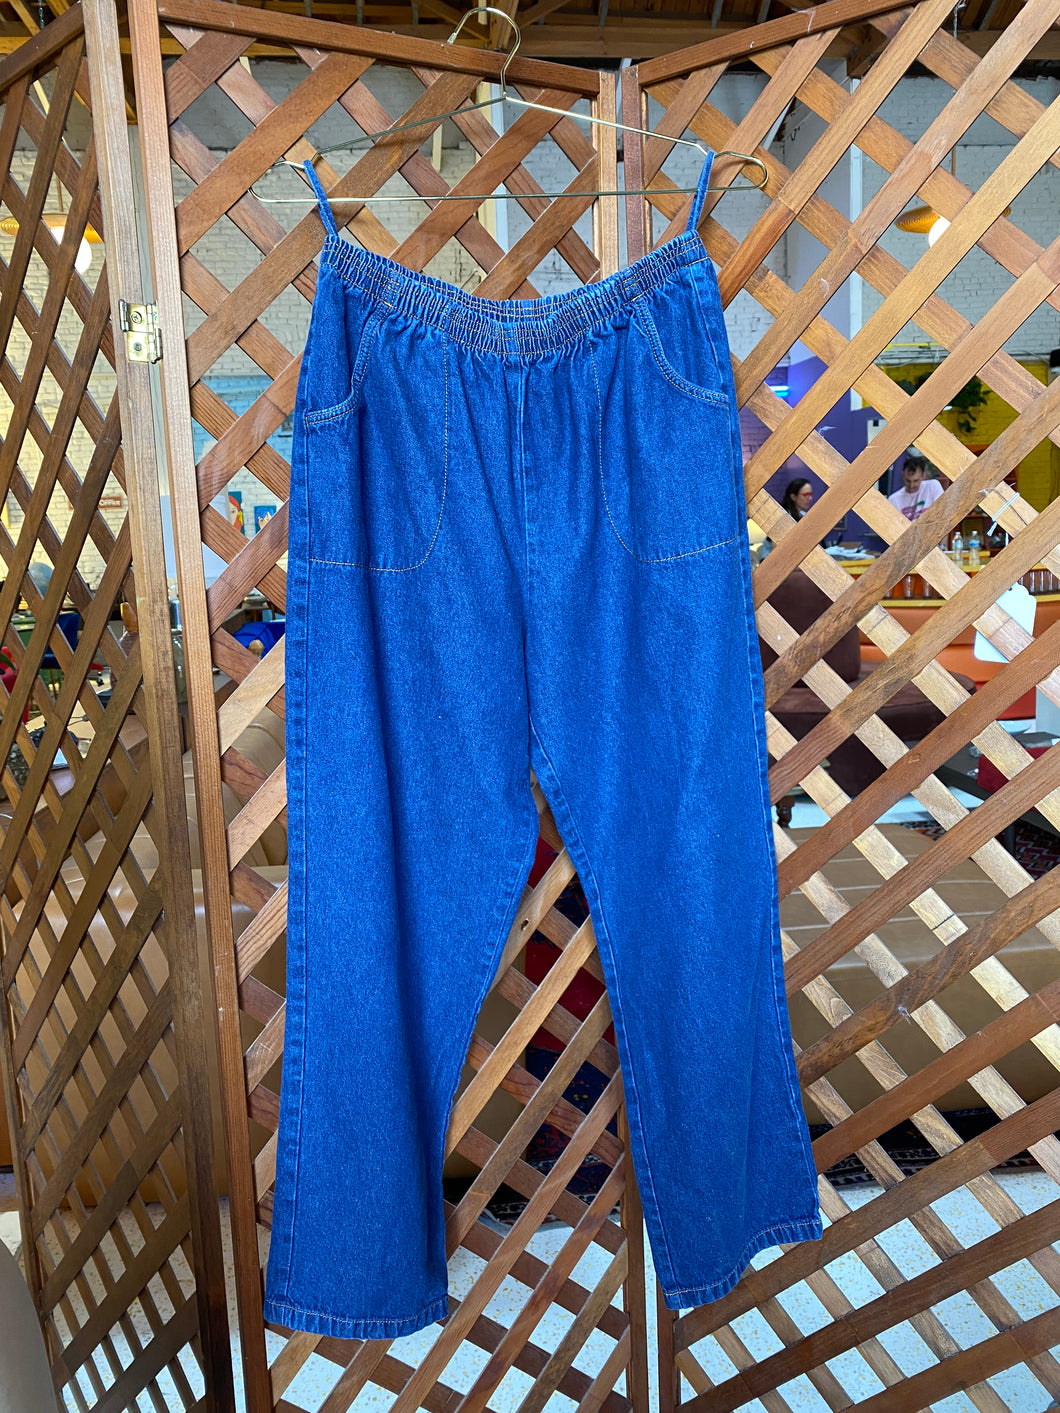 Vintage Blair Jeans with Elastic Waist (14P)